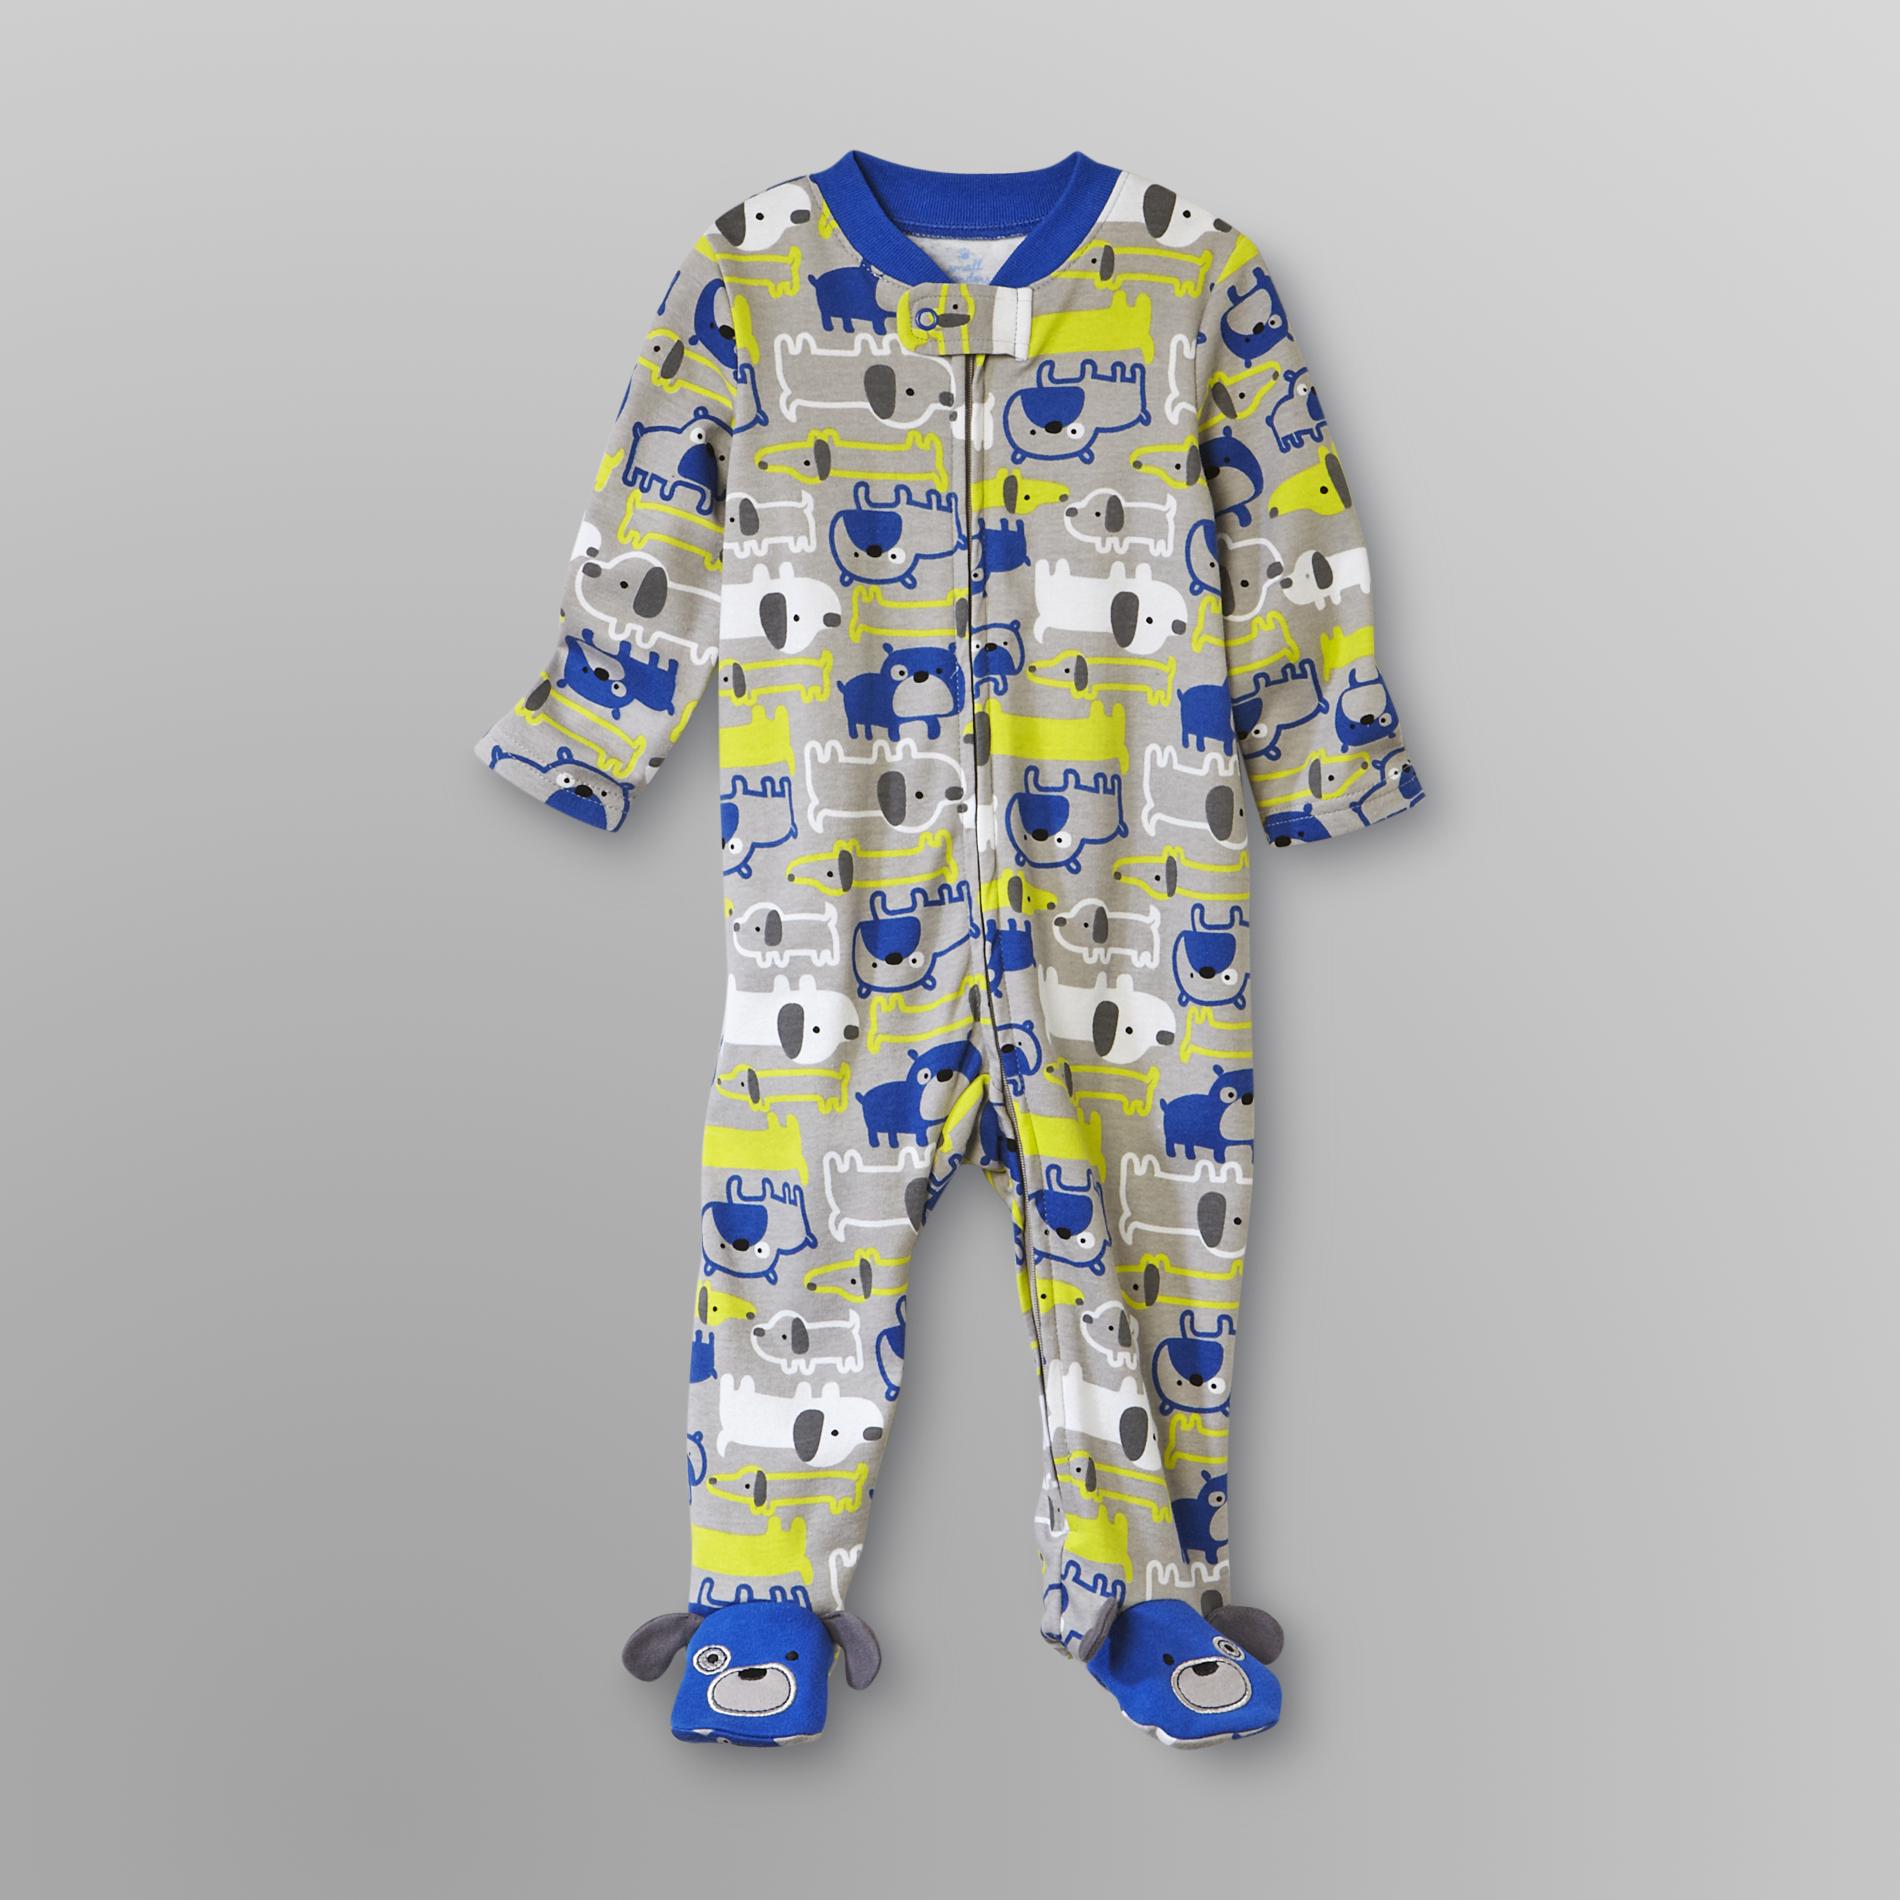 Small Wonders Infant Boy's Sleeper Pajamas - Dogs